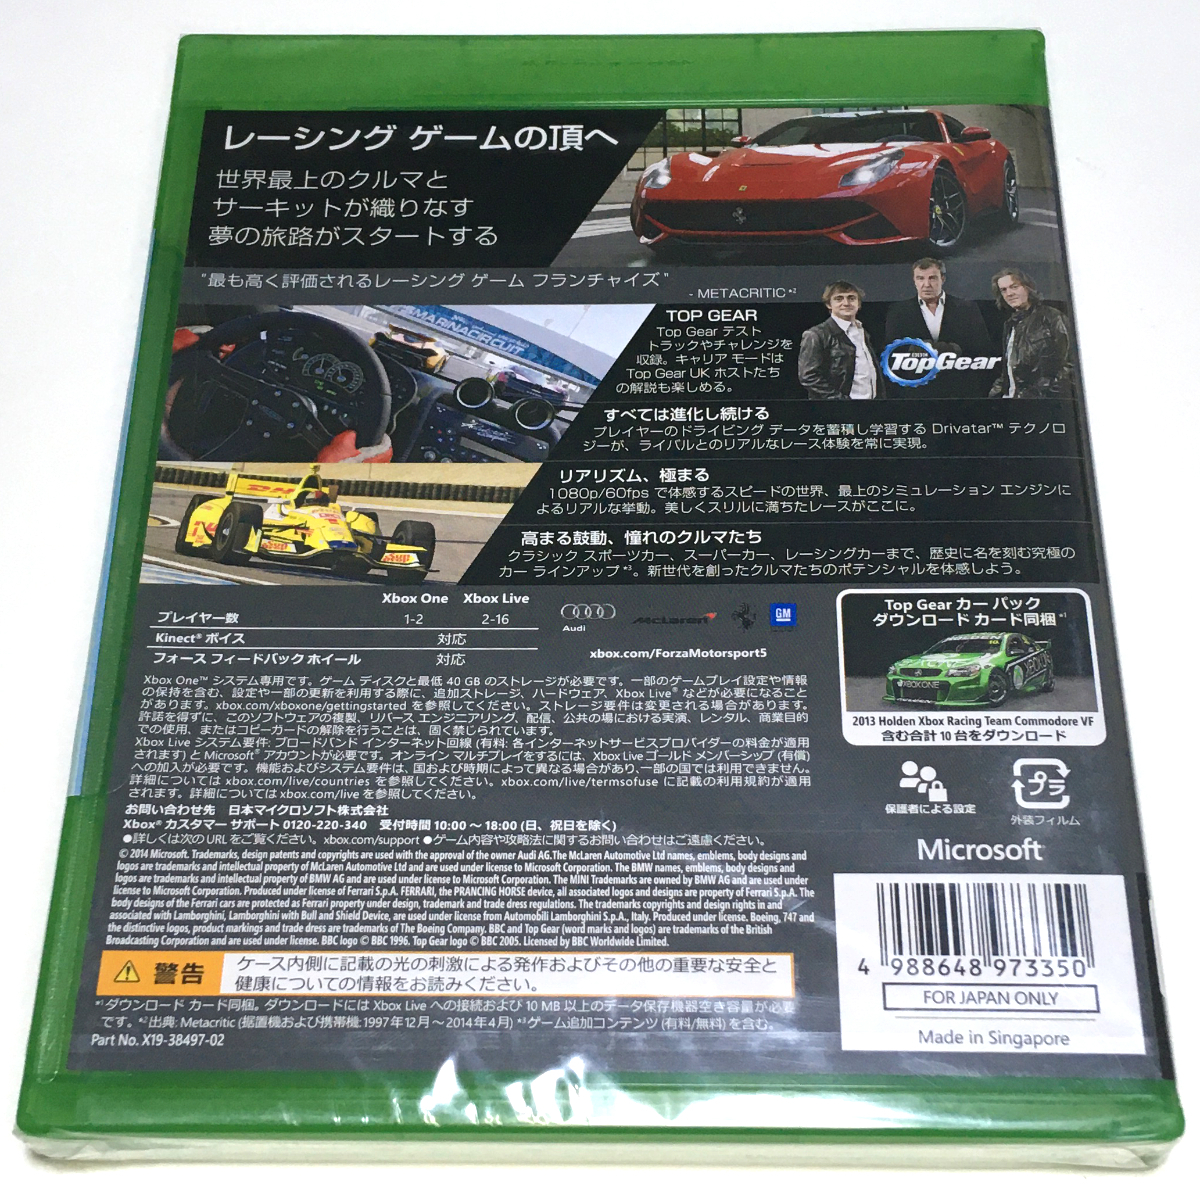 #[ new goods unopened ]Forza Motorsport 5 Xbox One general version ForzaMotorsport5 Forza Motor Sport 5s port 5 ho rutsa5 Turn10